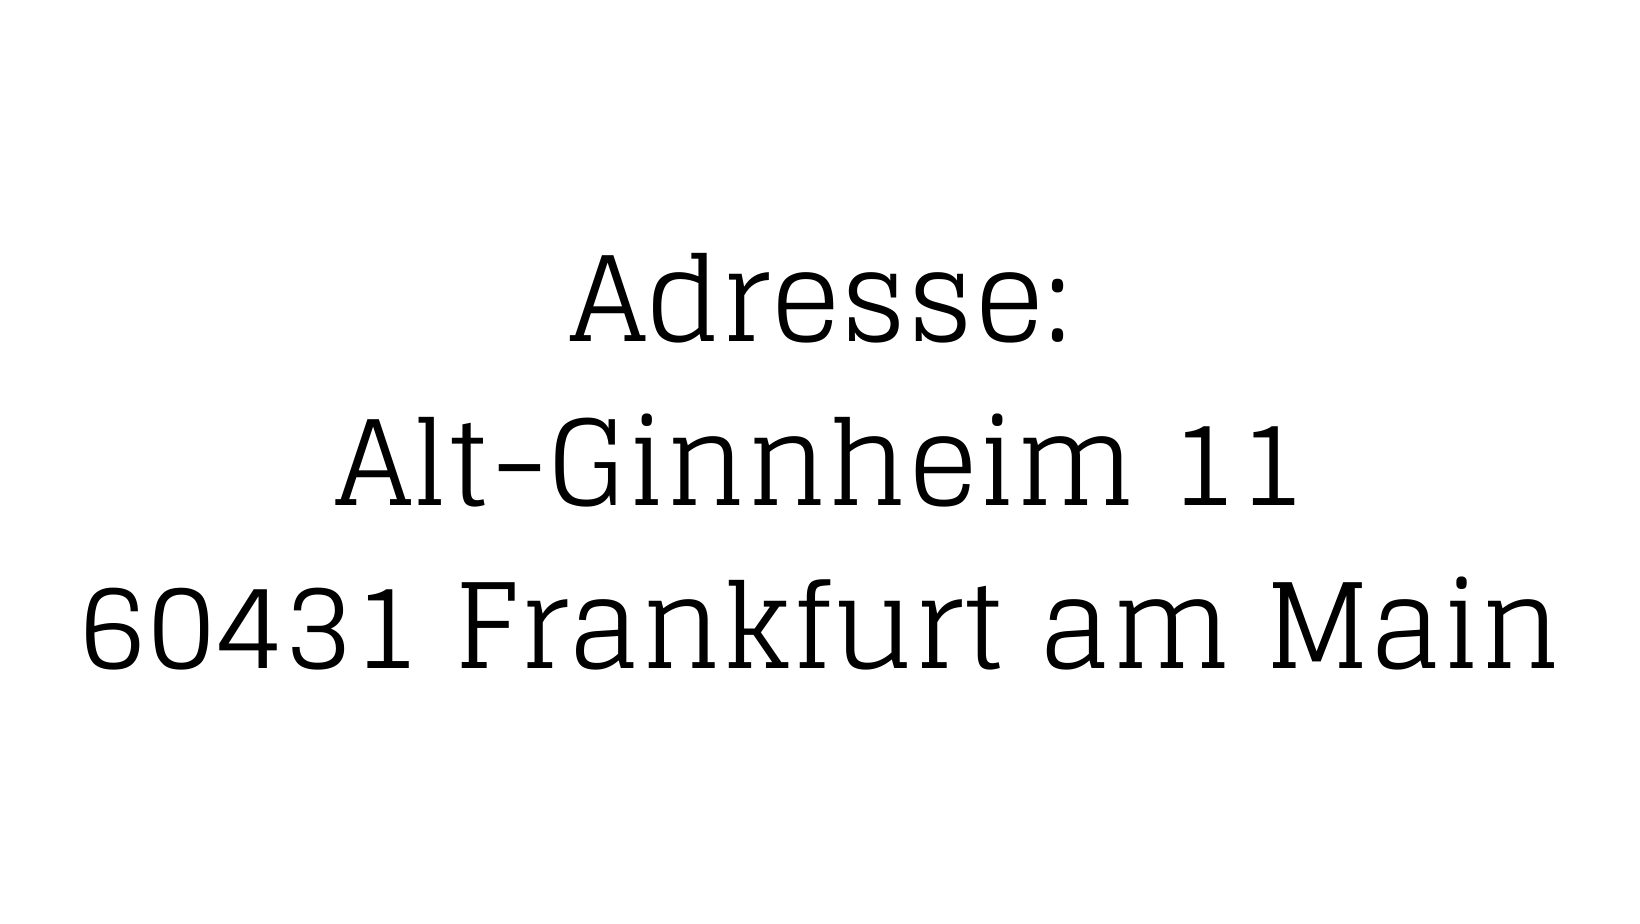 Adresse Alt-Ginnheim 11 60431 Frankfurt am Main